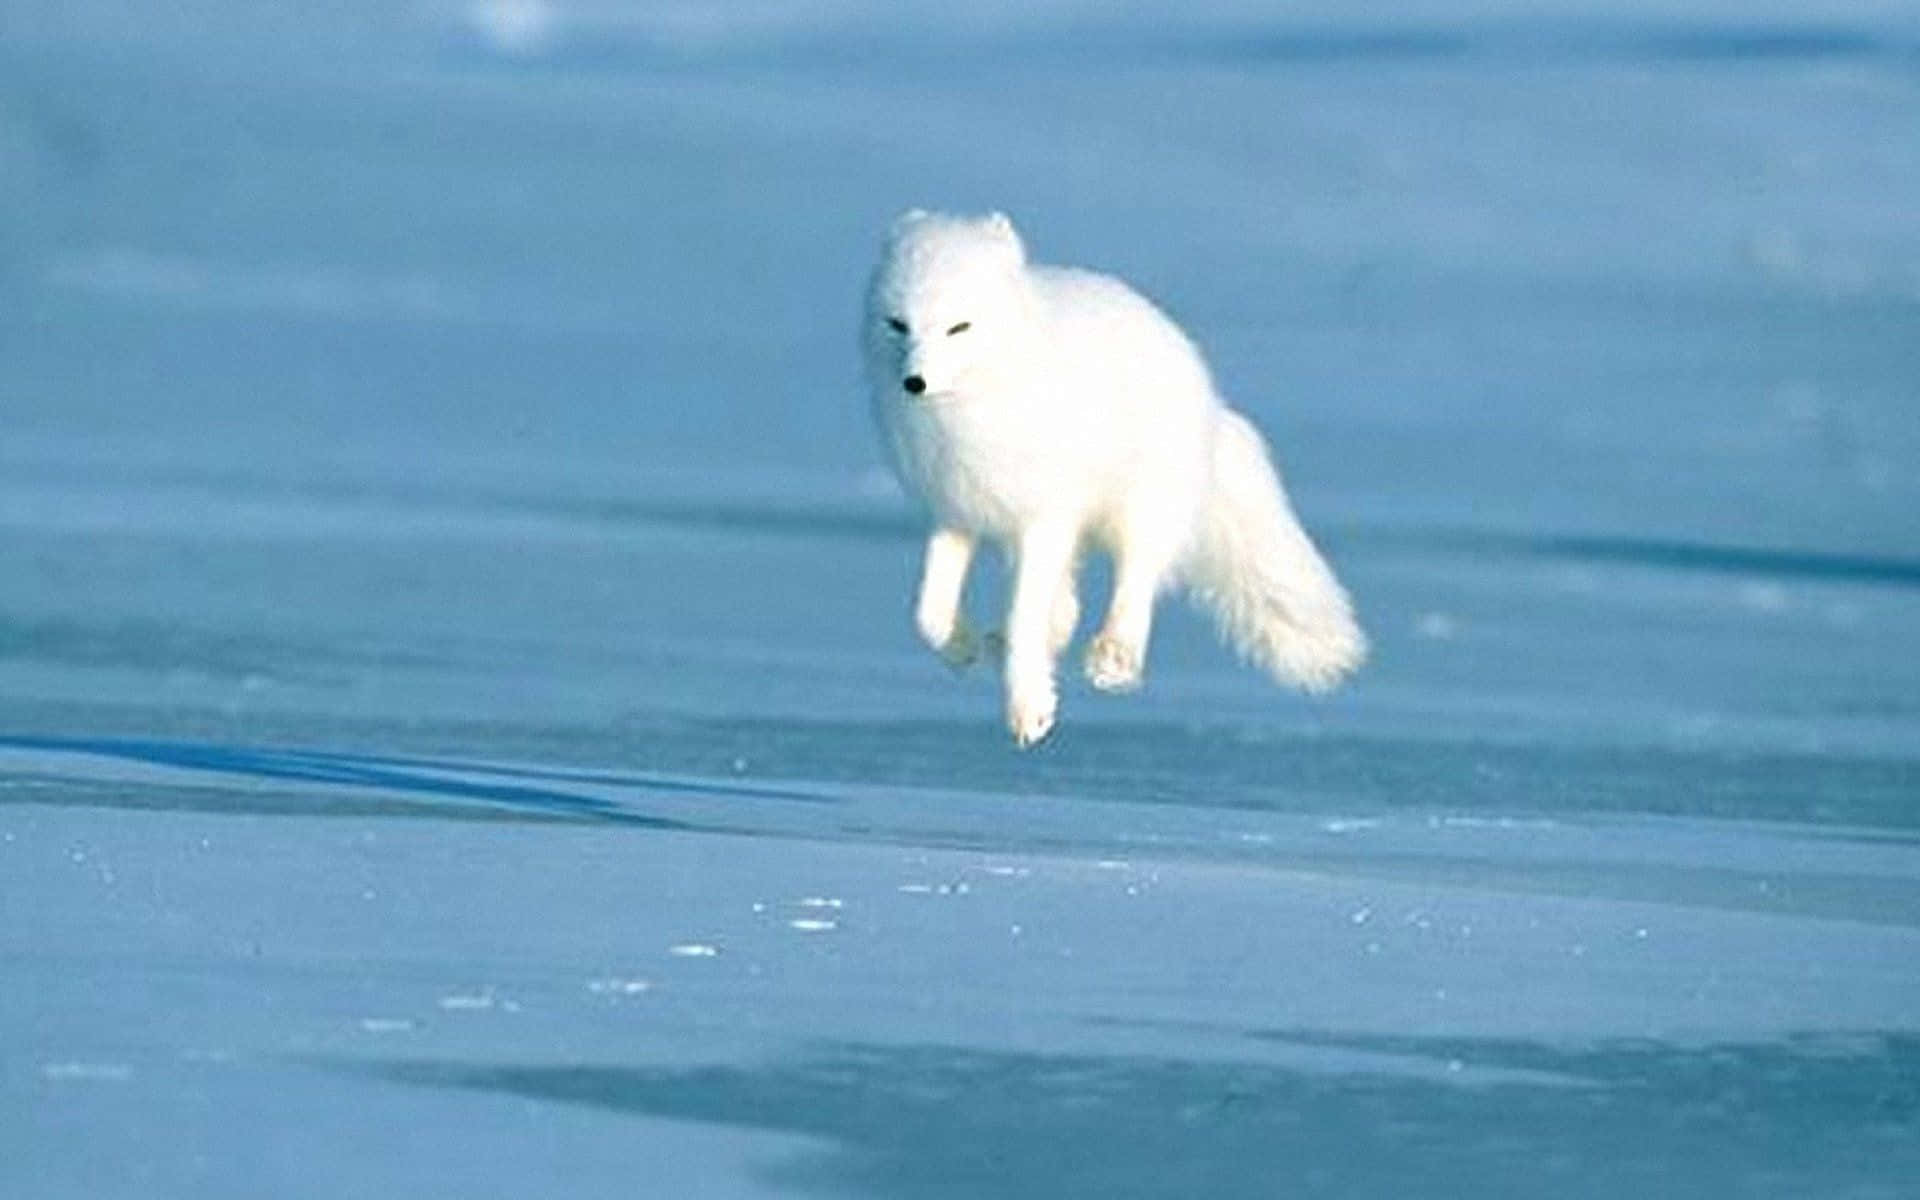 A playful Arctic fox enjoying a snowfall